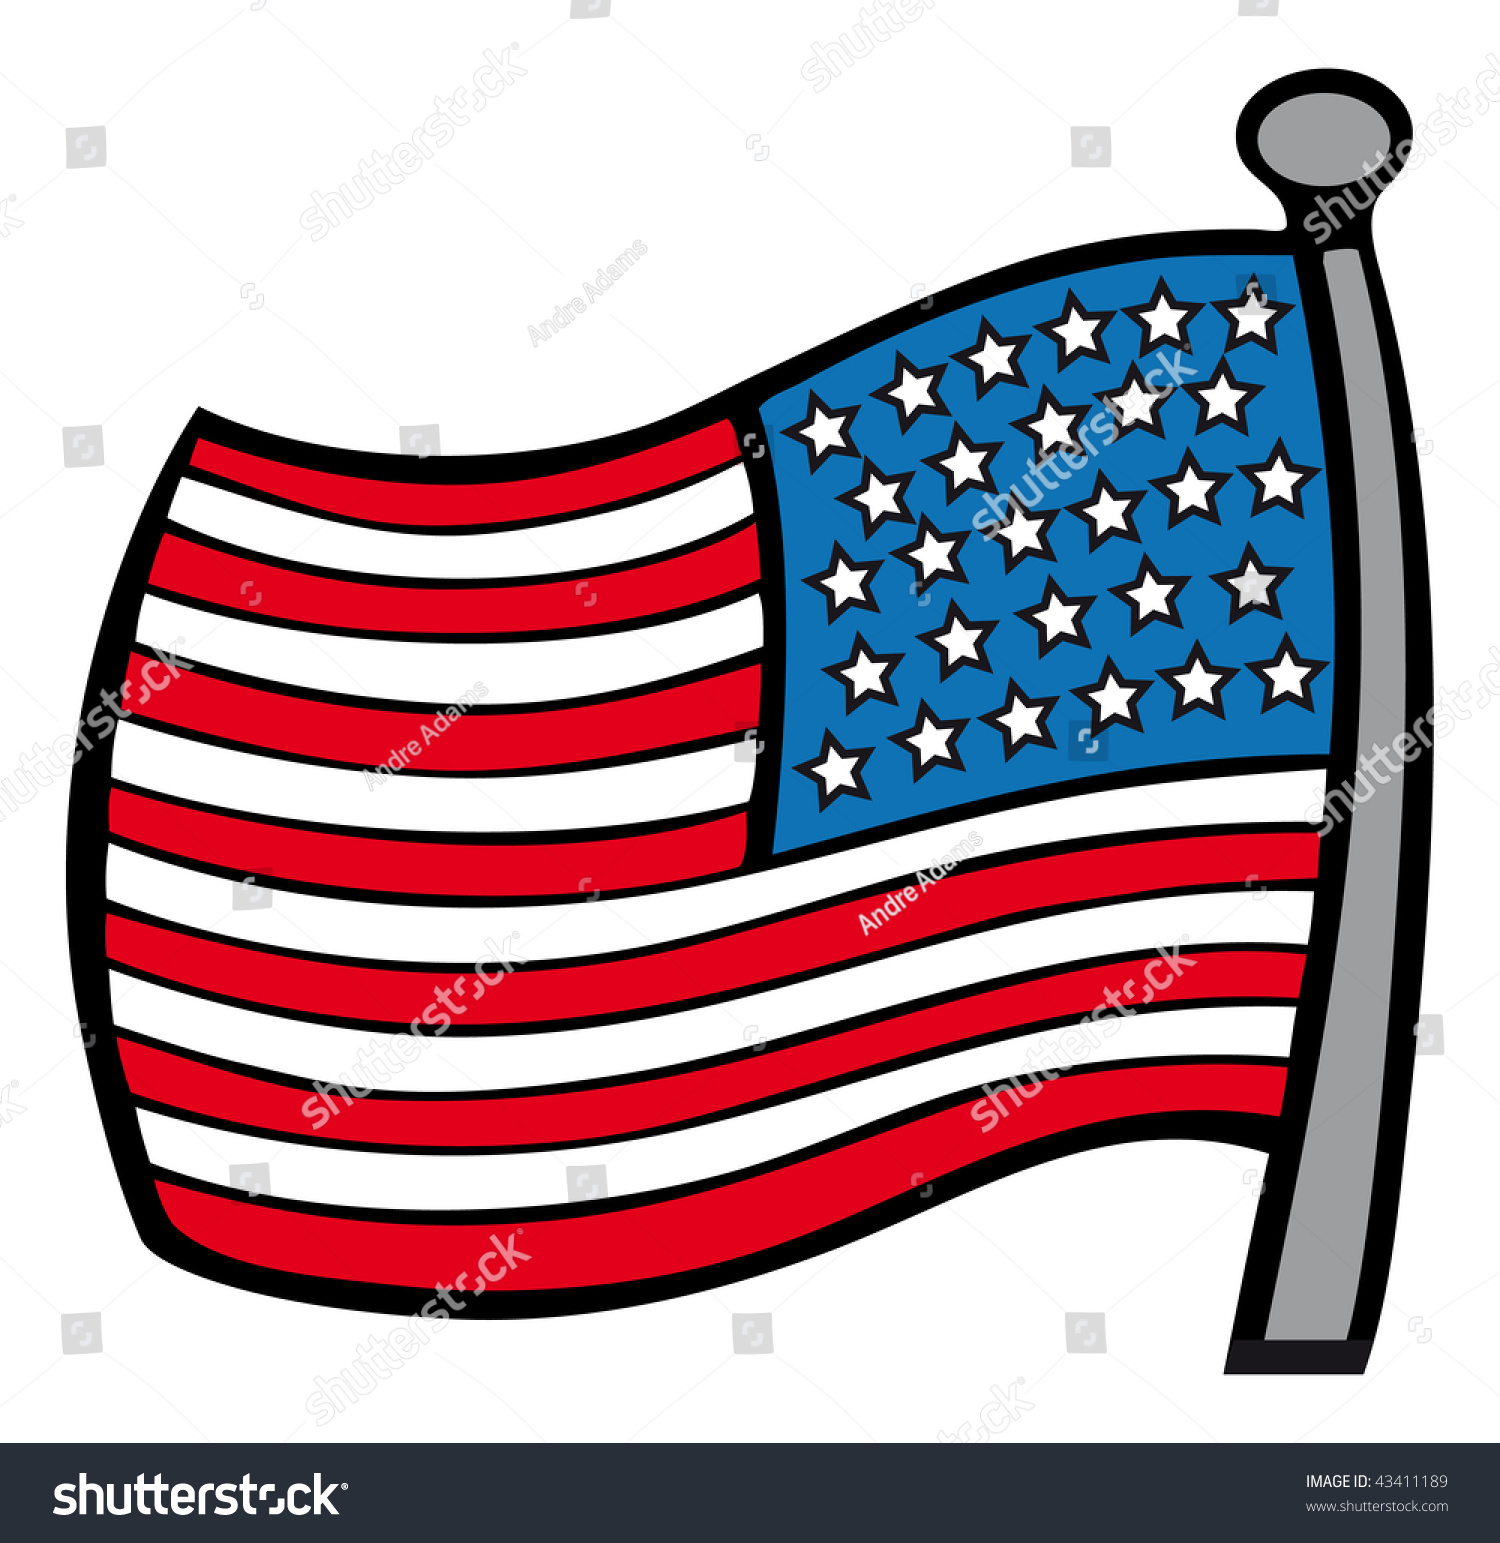 Download Cartoon Outline Vector Illustration American Flag Stock ...